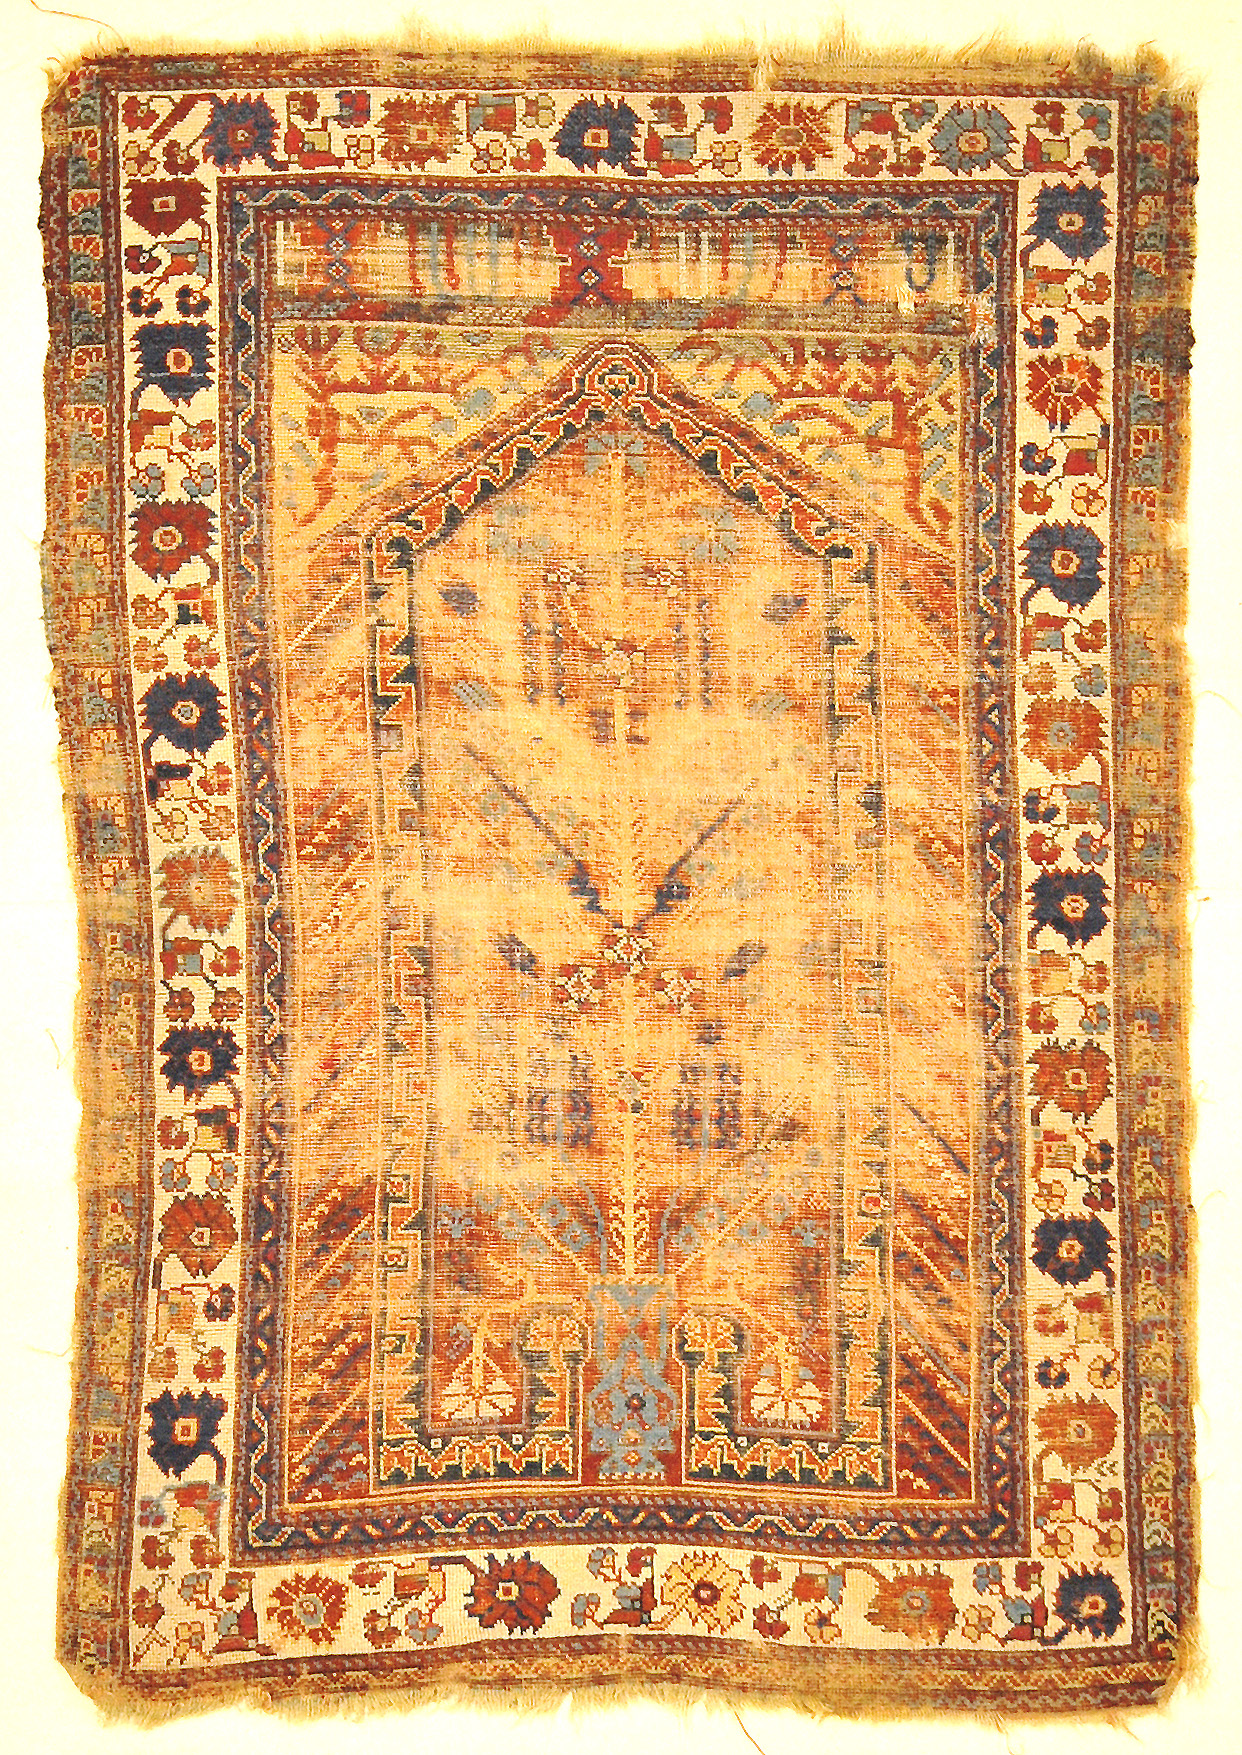 Rare Classical Milas Prayer Rug from Turkey Pre-1700s Genuine Authentic Woven Carpet Art Santa Barbara Design Center Rugs and More